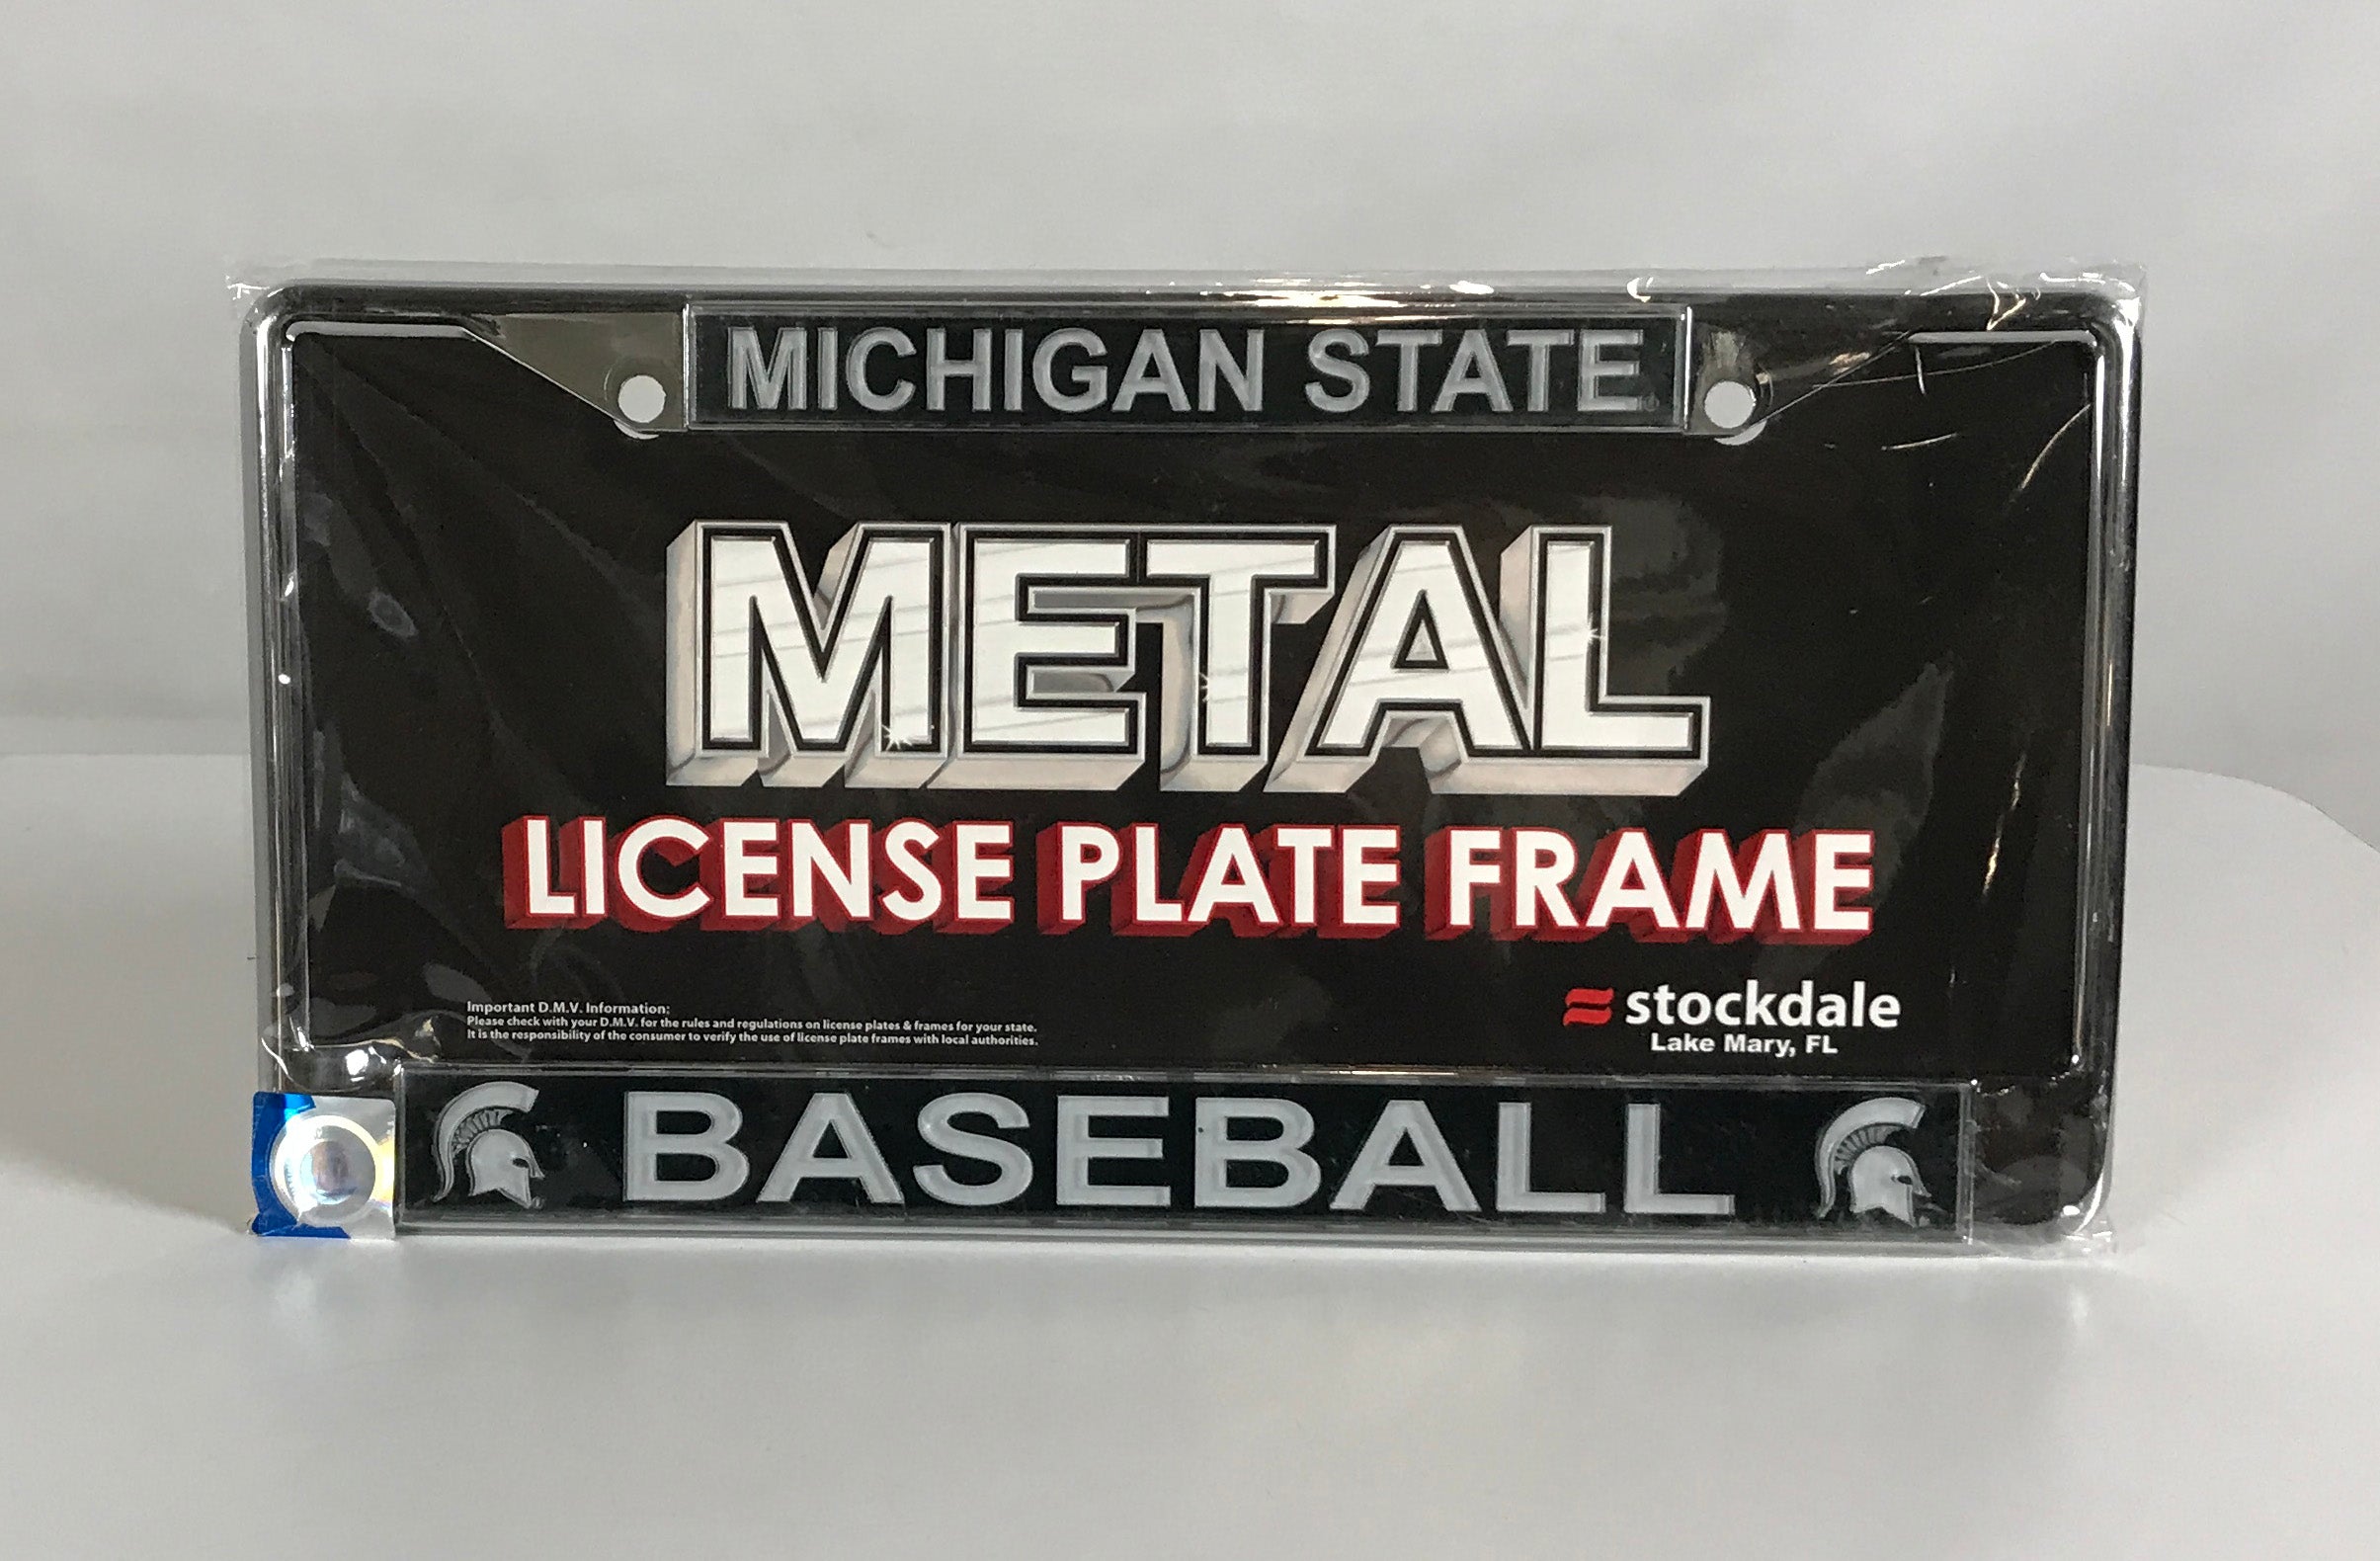 Michigan State Baseball License Plate Frame